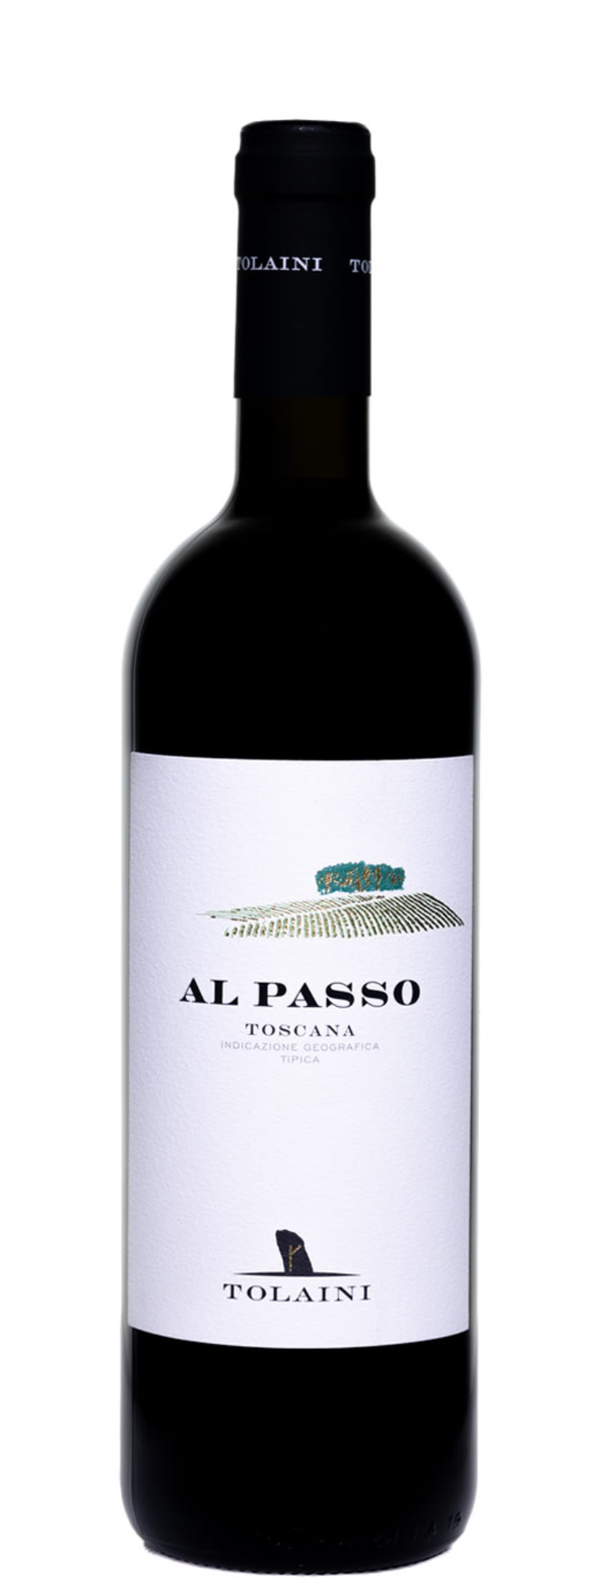 Tolaini “Al Passo” Toscana 2020 (Email Sale, Arrives 4/24)